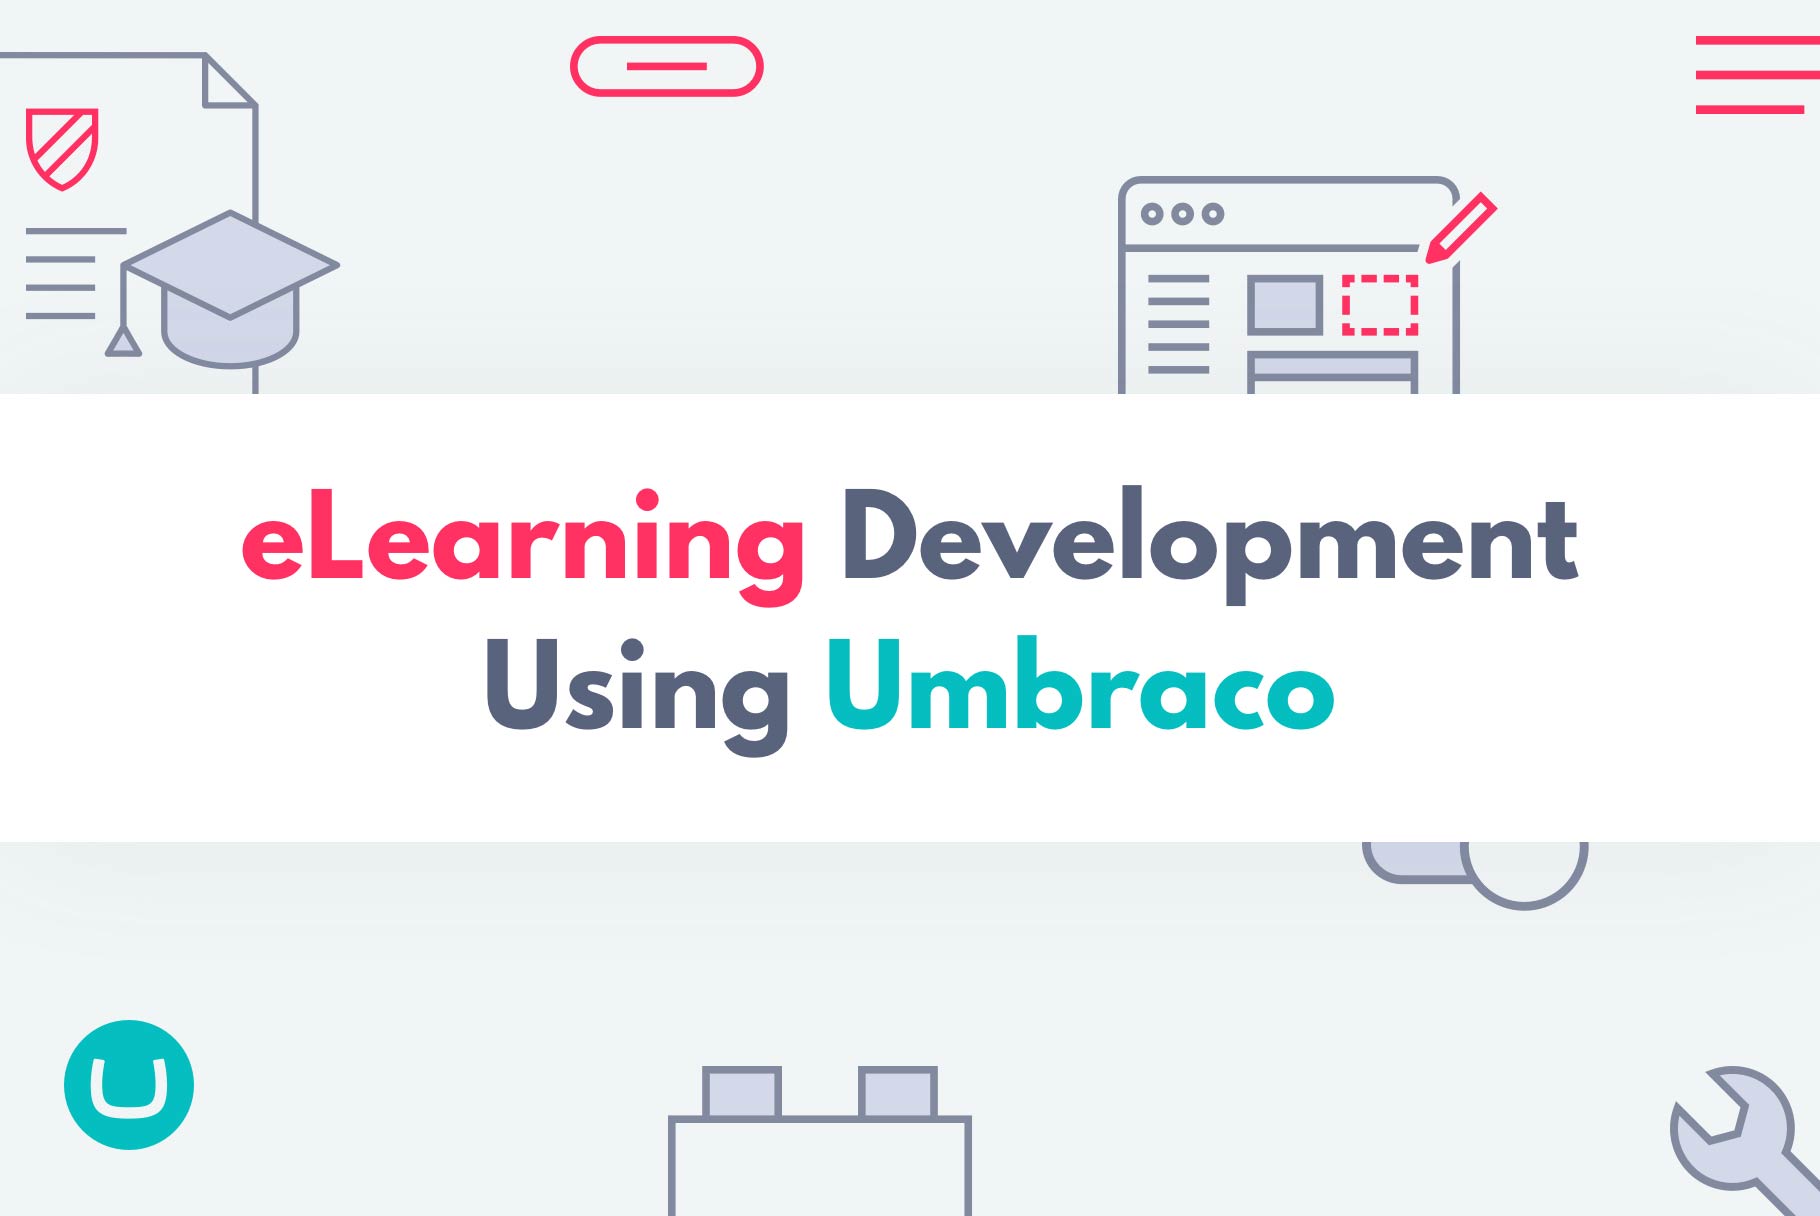 eLearning development with Umbraco